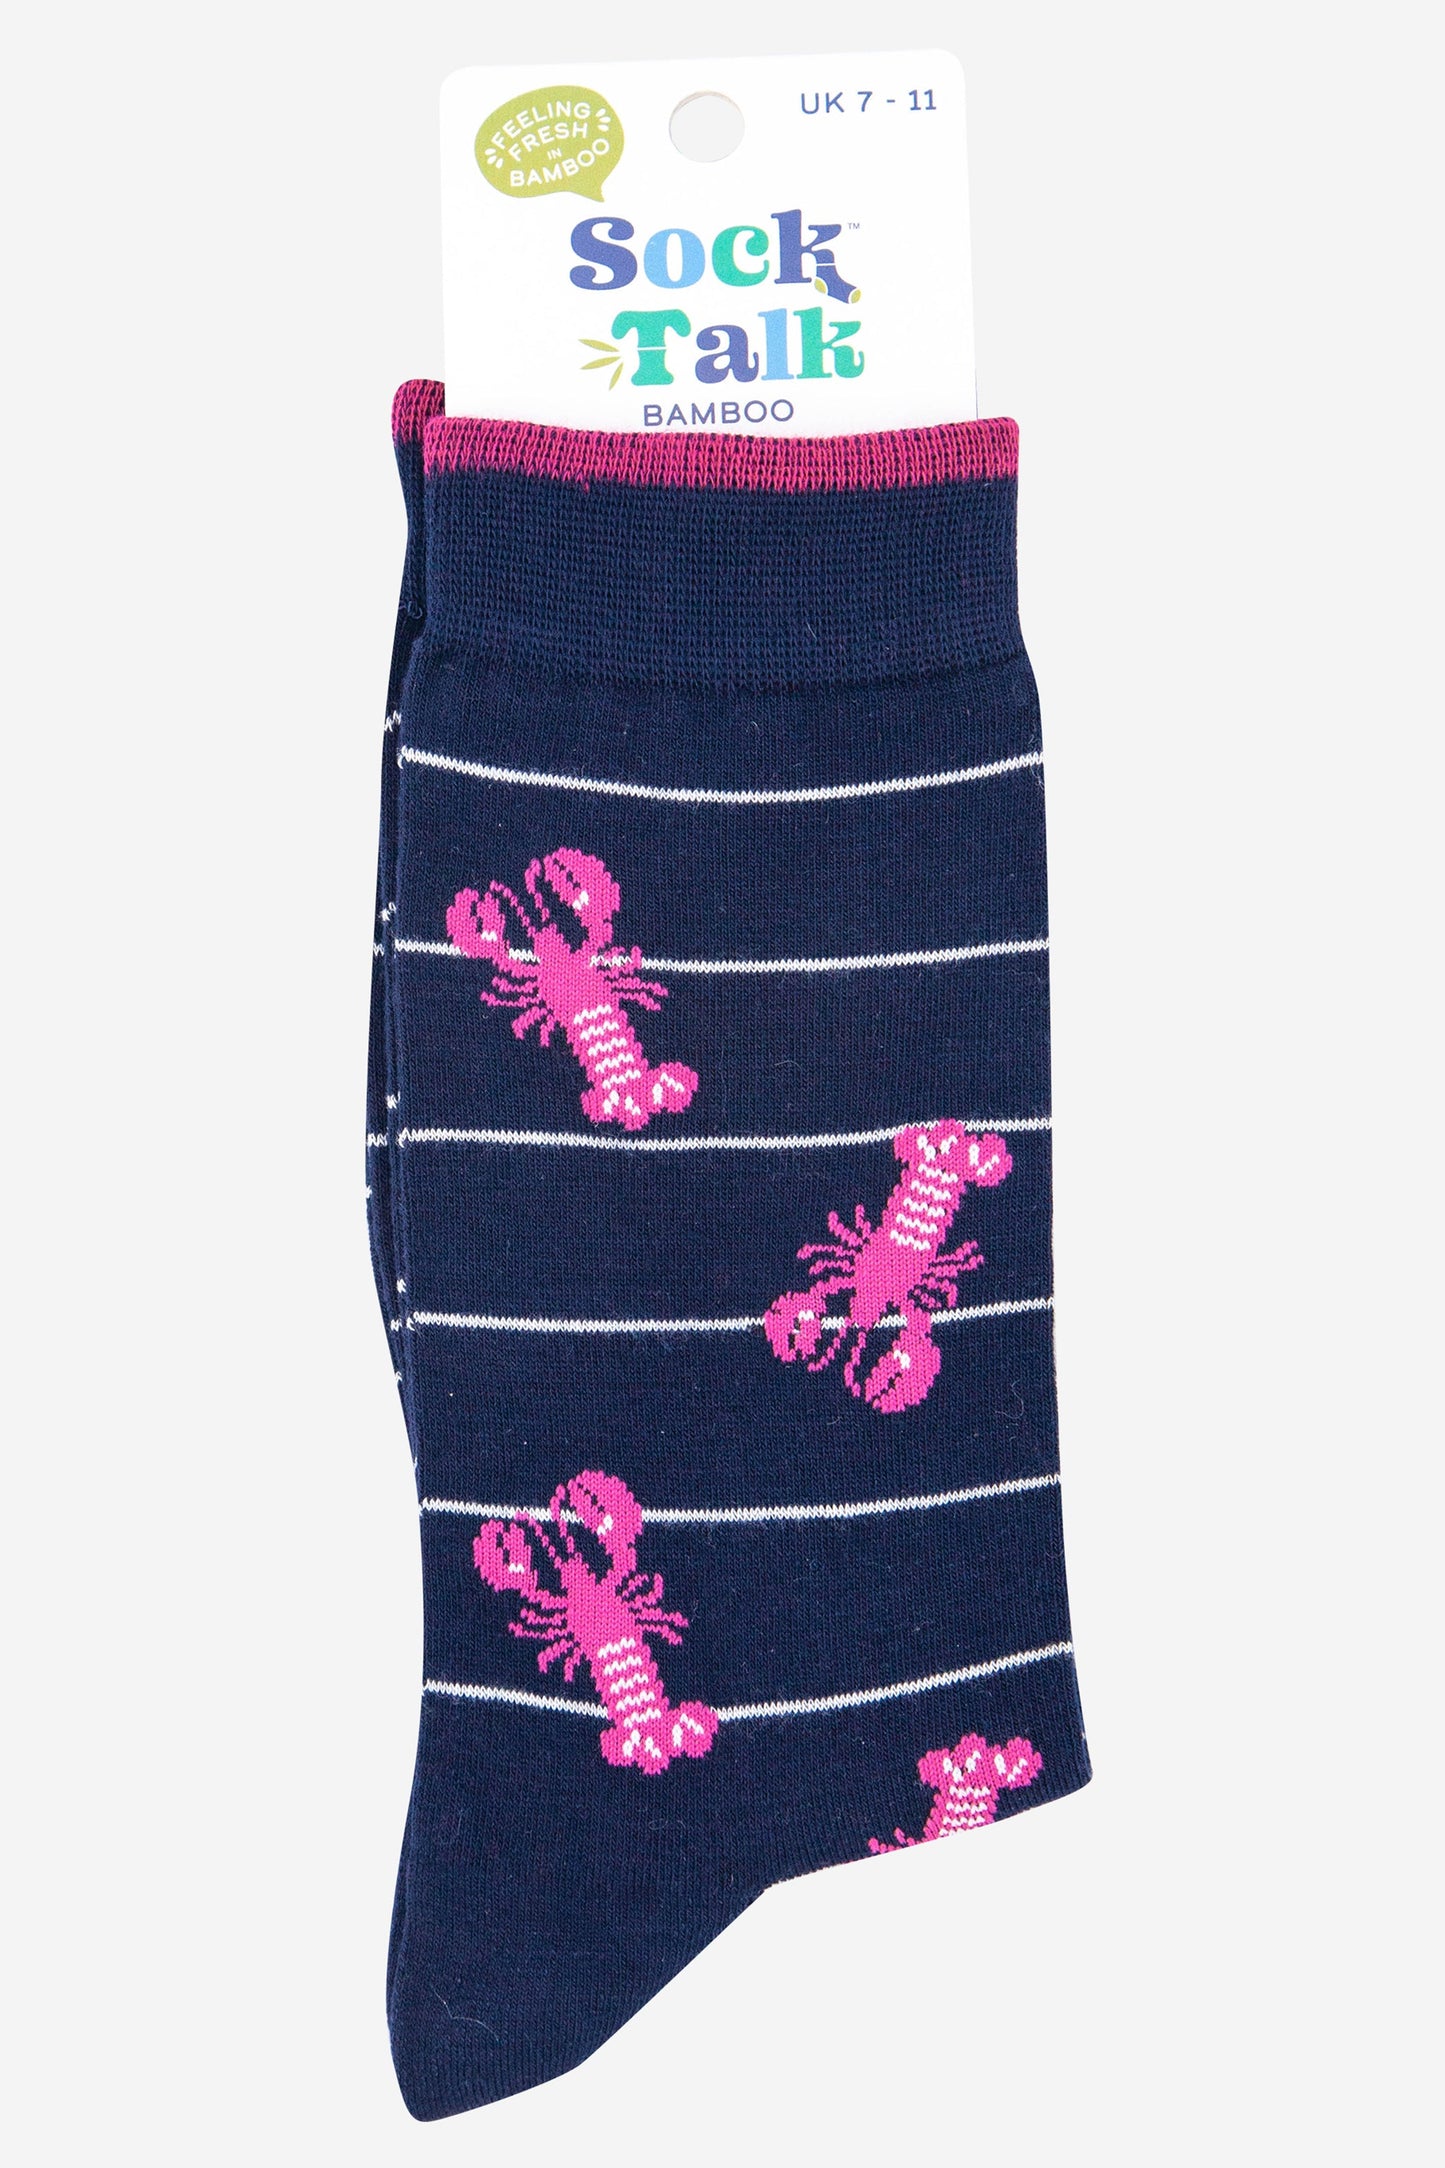 mens navy blue lobster print bamboo socks uk size 7-11